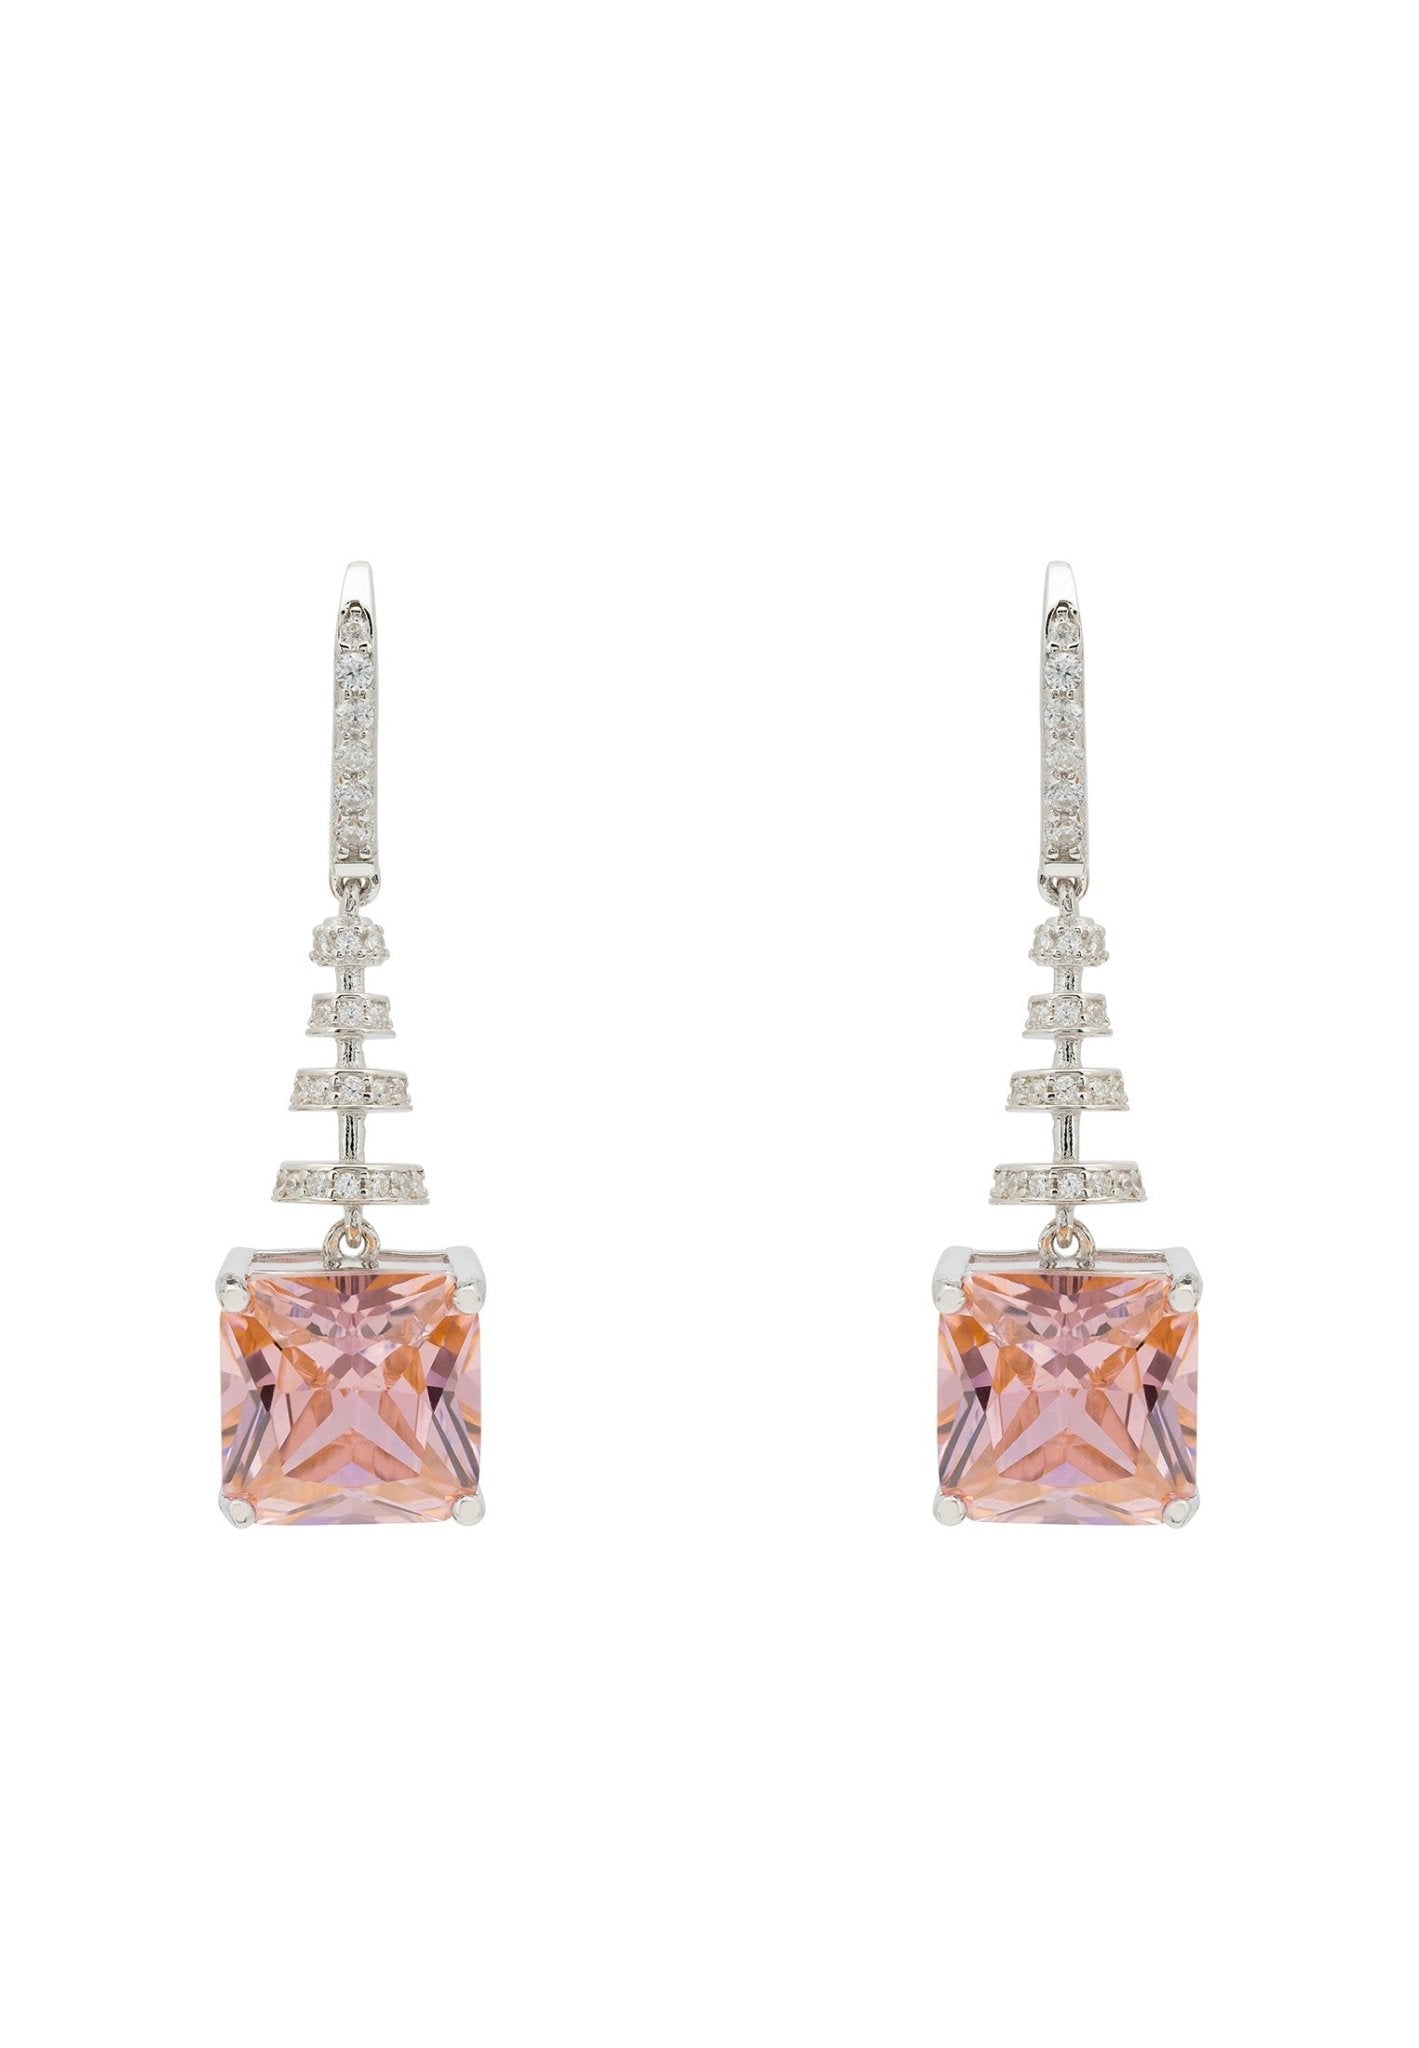 Spiral Square Crystal Drop Earrings Morganite Pink Silver - LATELITA Earrings